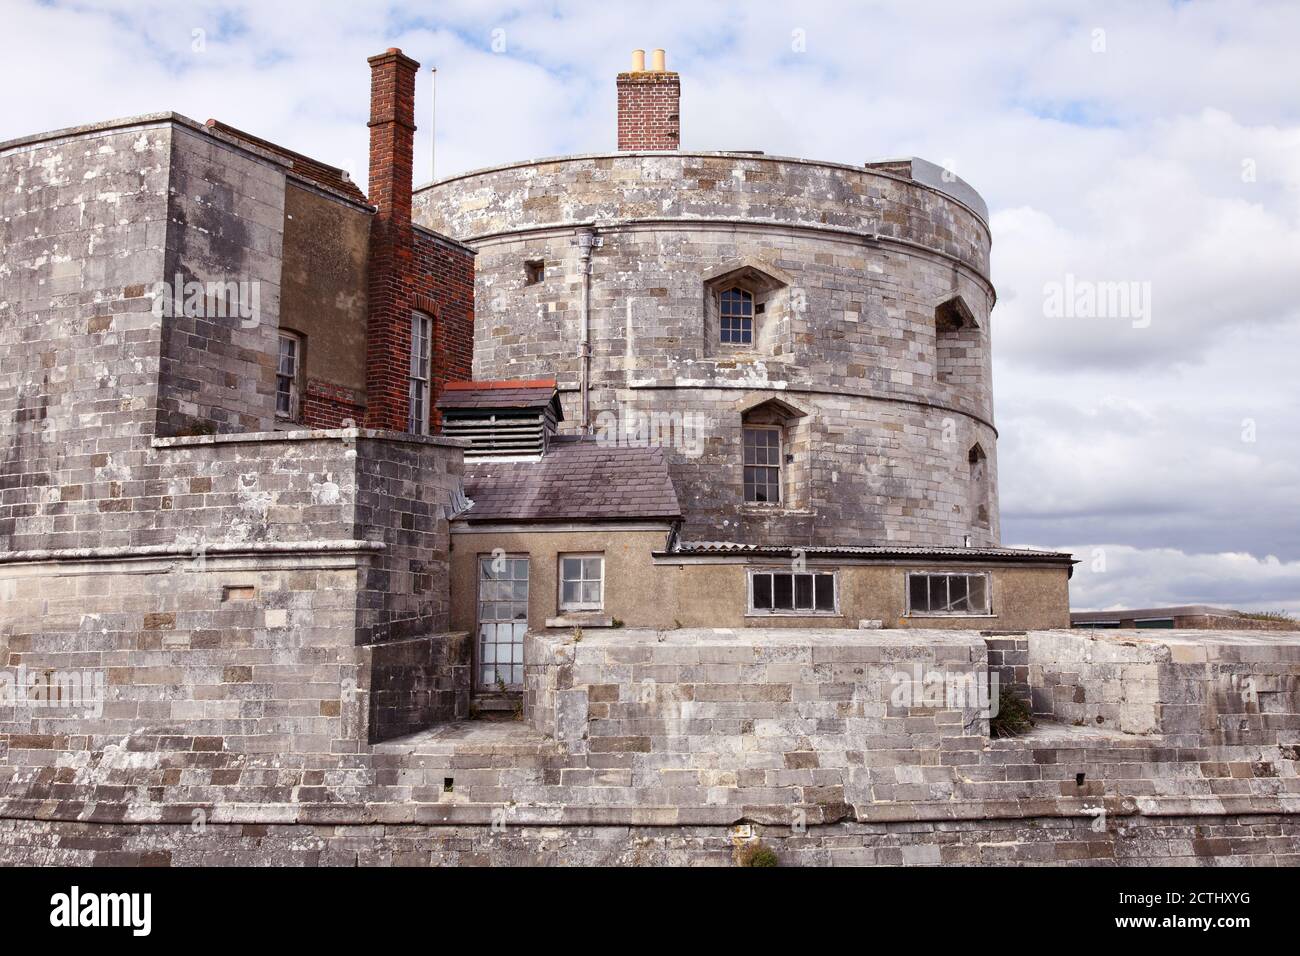 Calshot Castle Artillerie Fort auf der Calshot Spit, Southampton, Hampshire. Beispiel eines Steinblockhauses King’s Device Fort oder Henrician Castle. Stockfoto